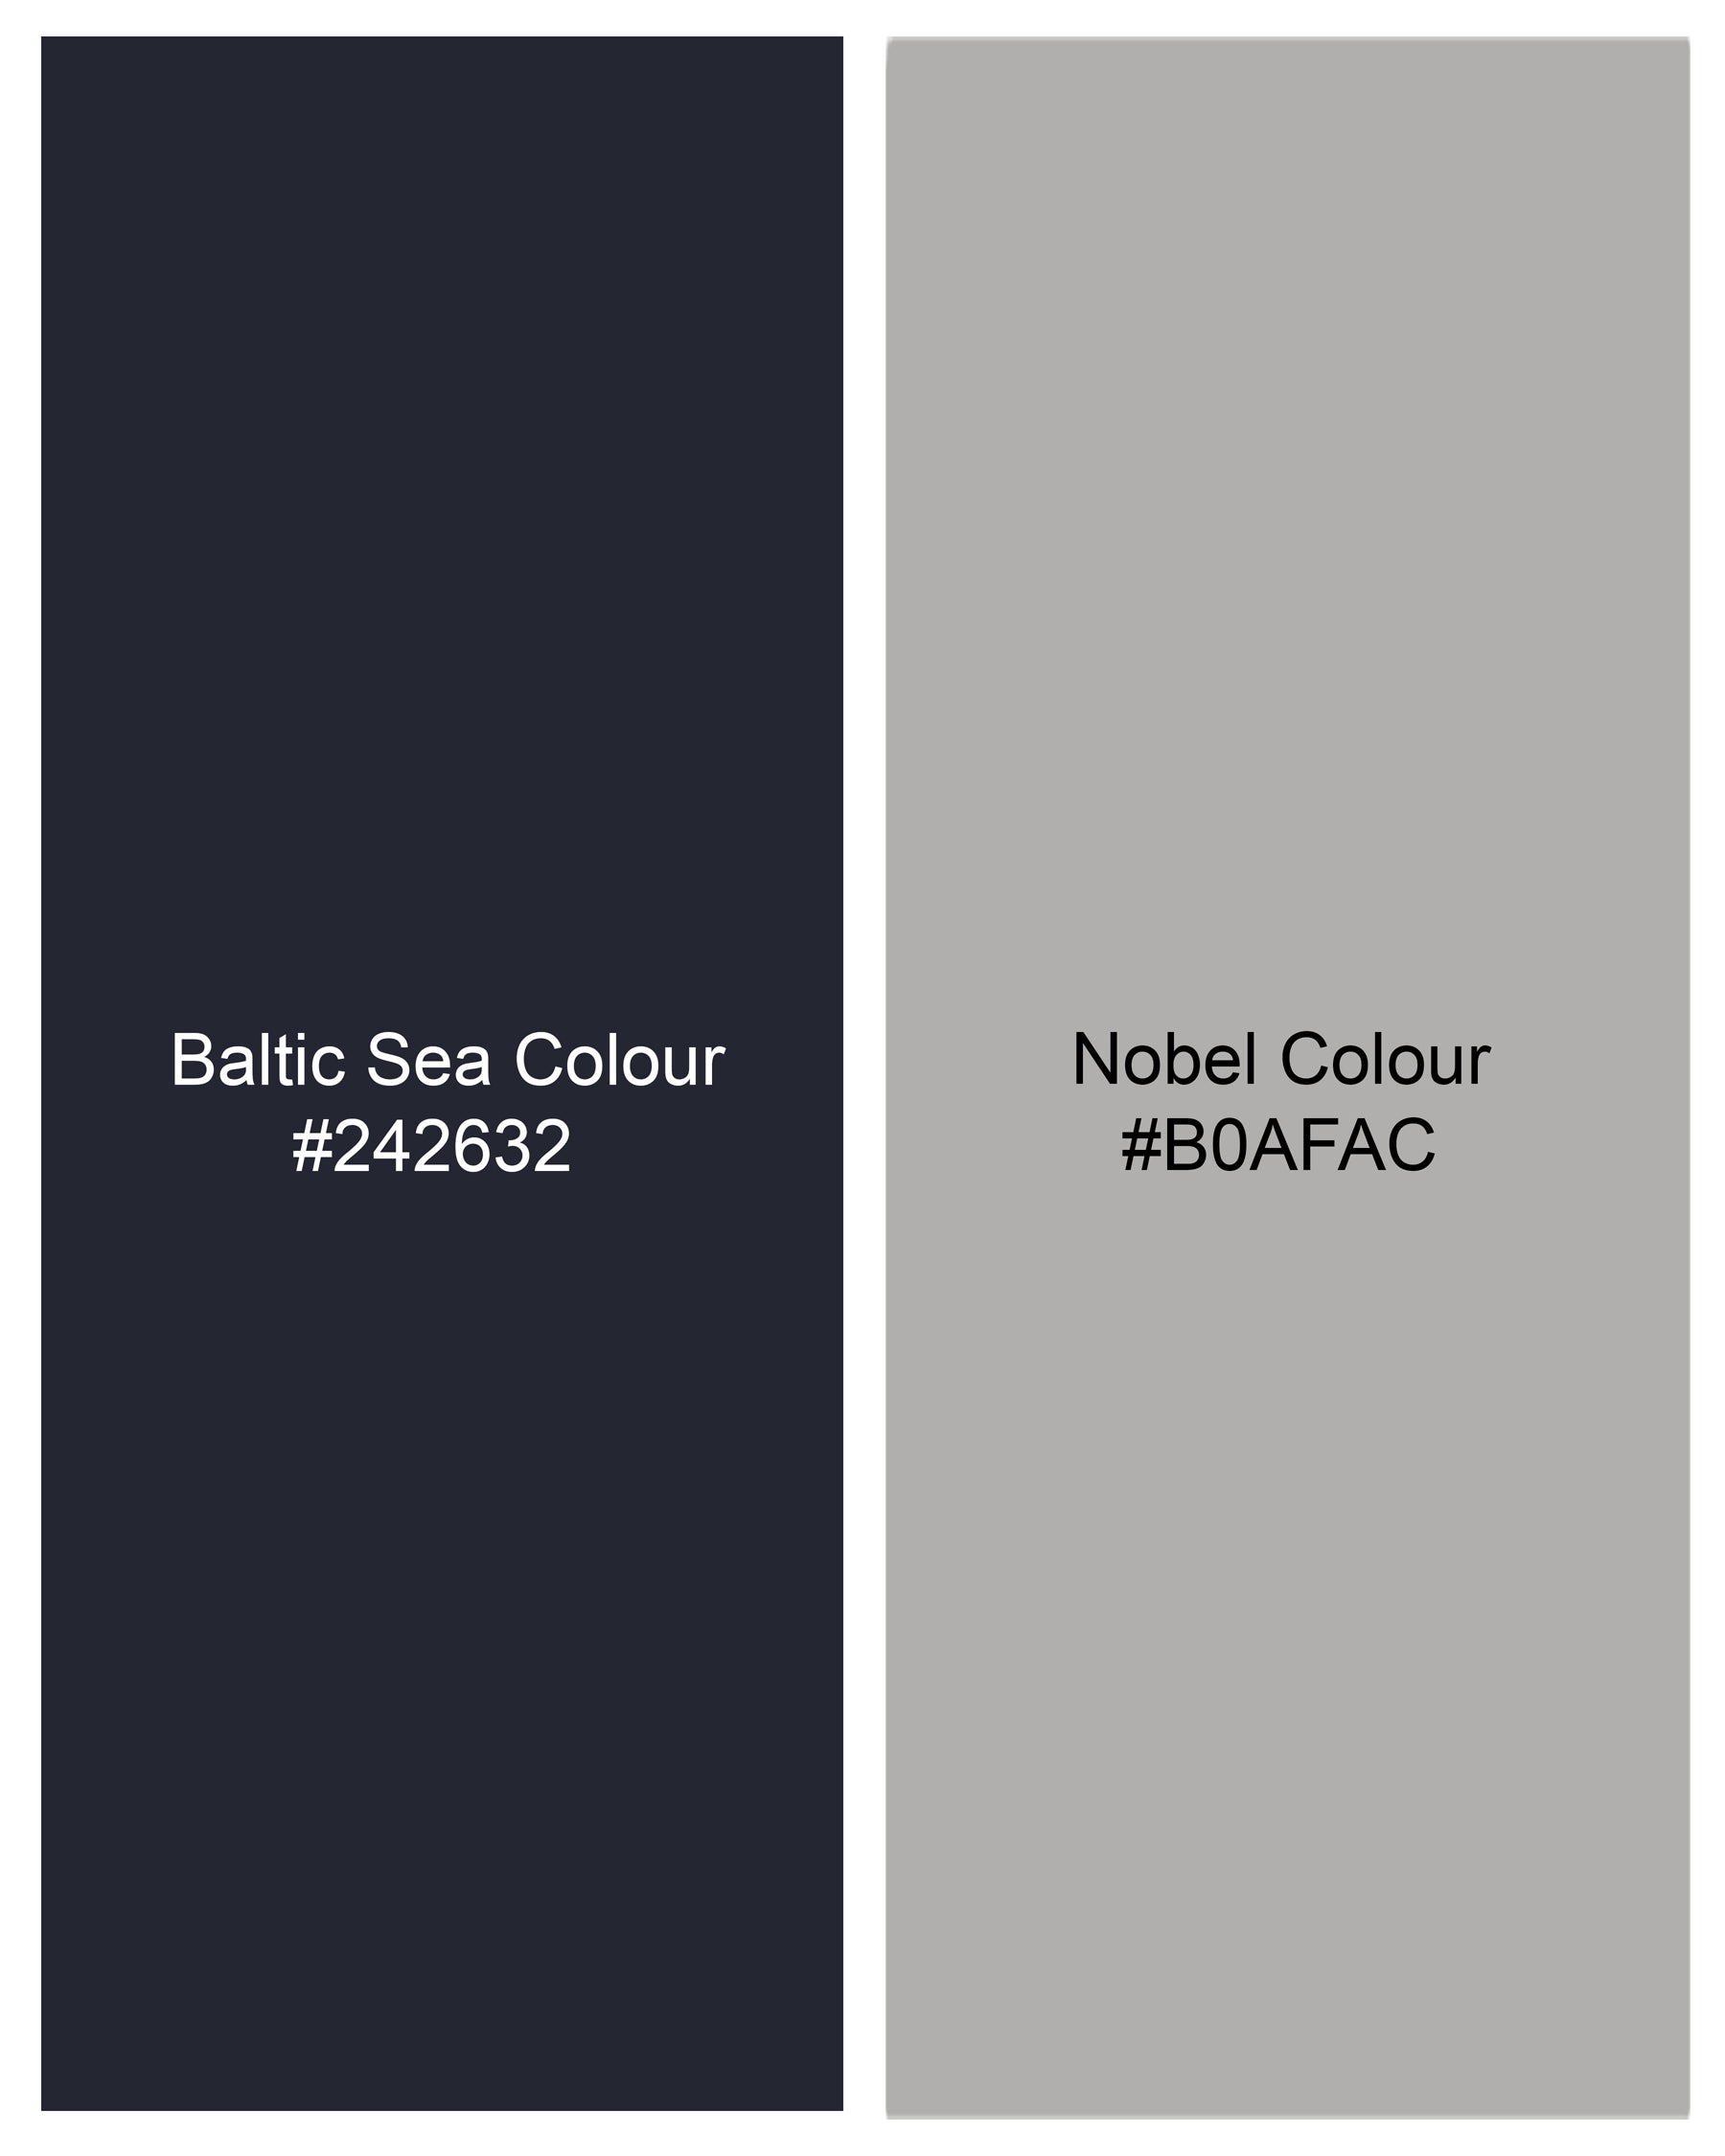 Baltic Sea Navy Blue Paisley Textured Flannel Premium Cotton Bandhgala Designer Blazer BL2184-BG-36, BL2184-BG-38, BL2184-BG-40, BL2184-BG-42, BL2184-BG-44, BL2184-BG-46, BL2184-BG-48, BL2184-BG-50, BL2184-BG-52, BL2184-BG-54, BL2184-BG-56, BL2184-BG-58, BL2184-BG-60